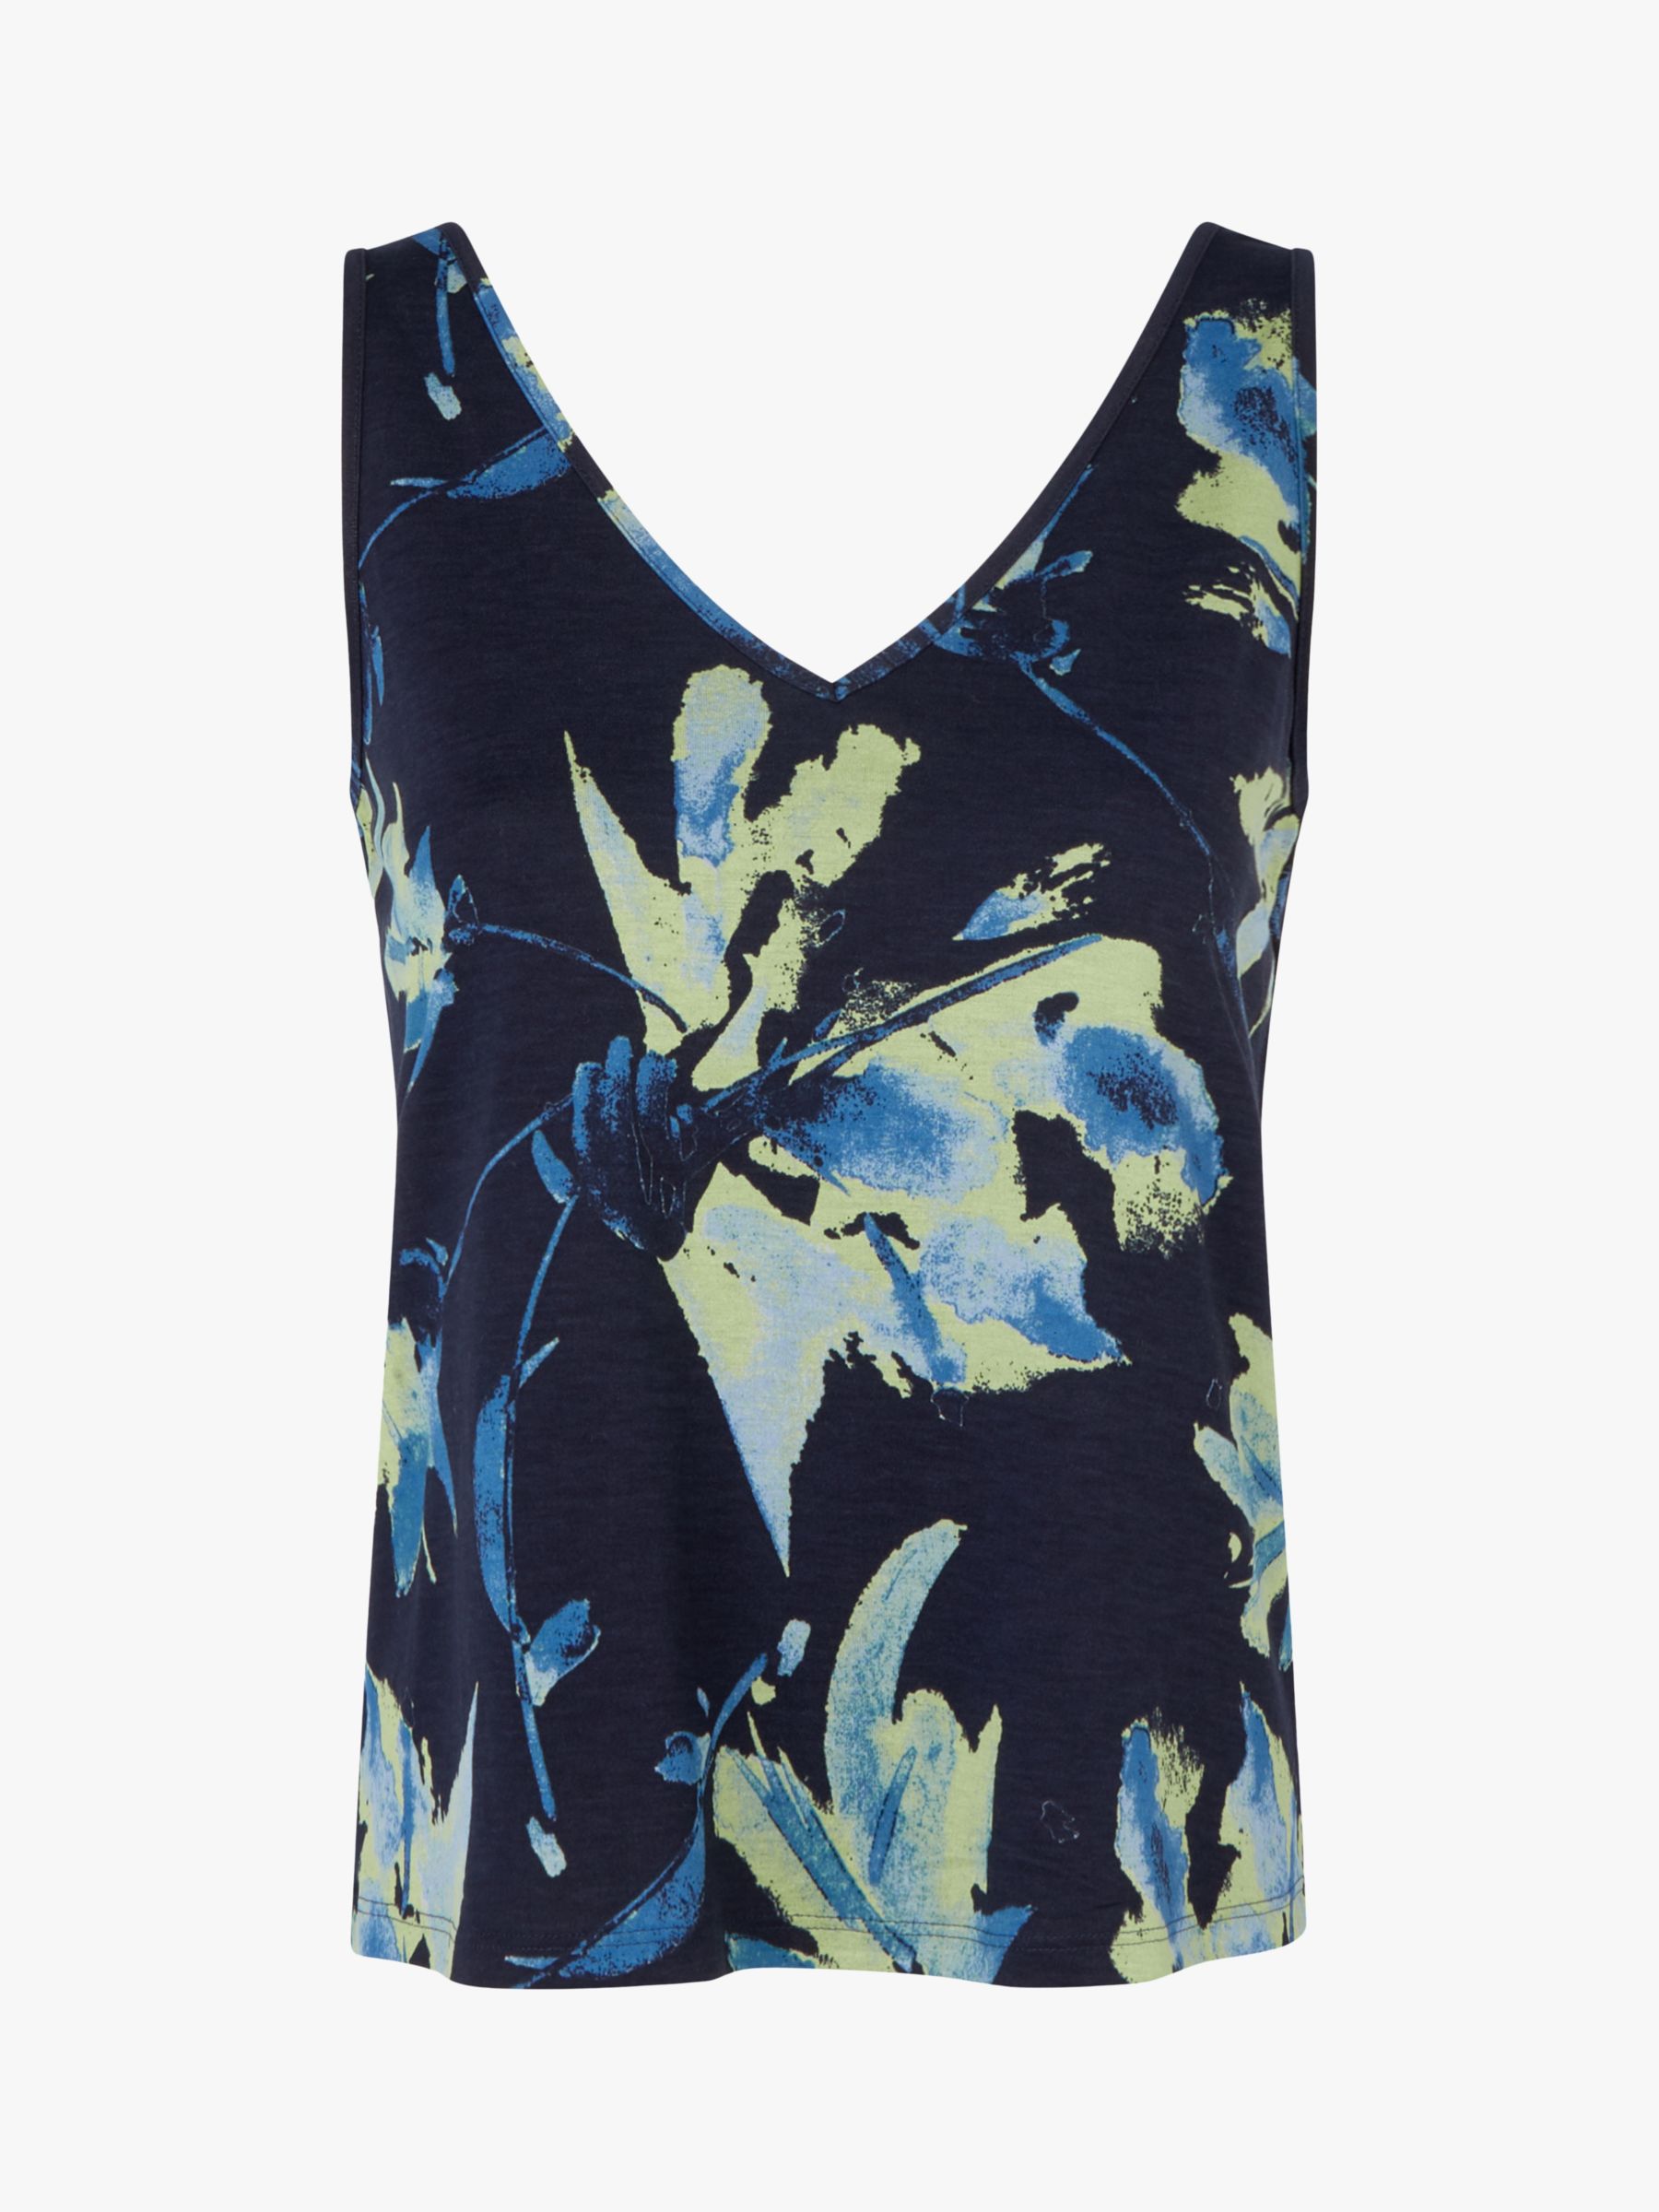 Femilet Elina Flower Print Vest Top, Black/Multi, XS